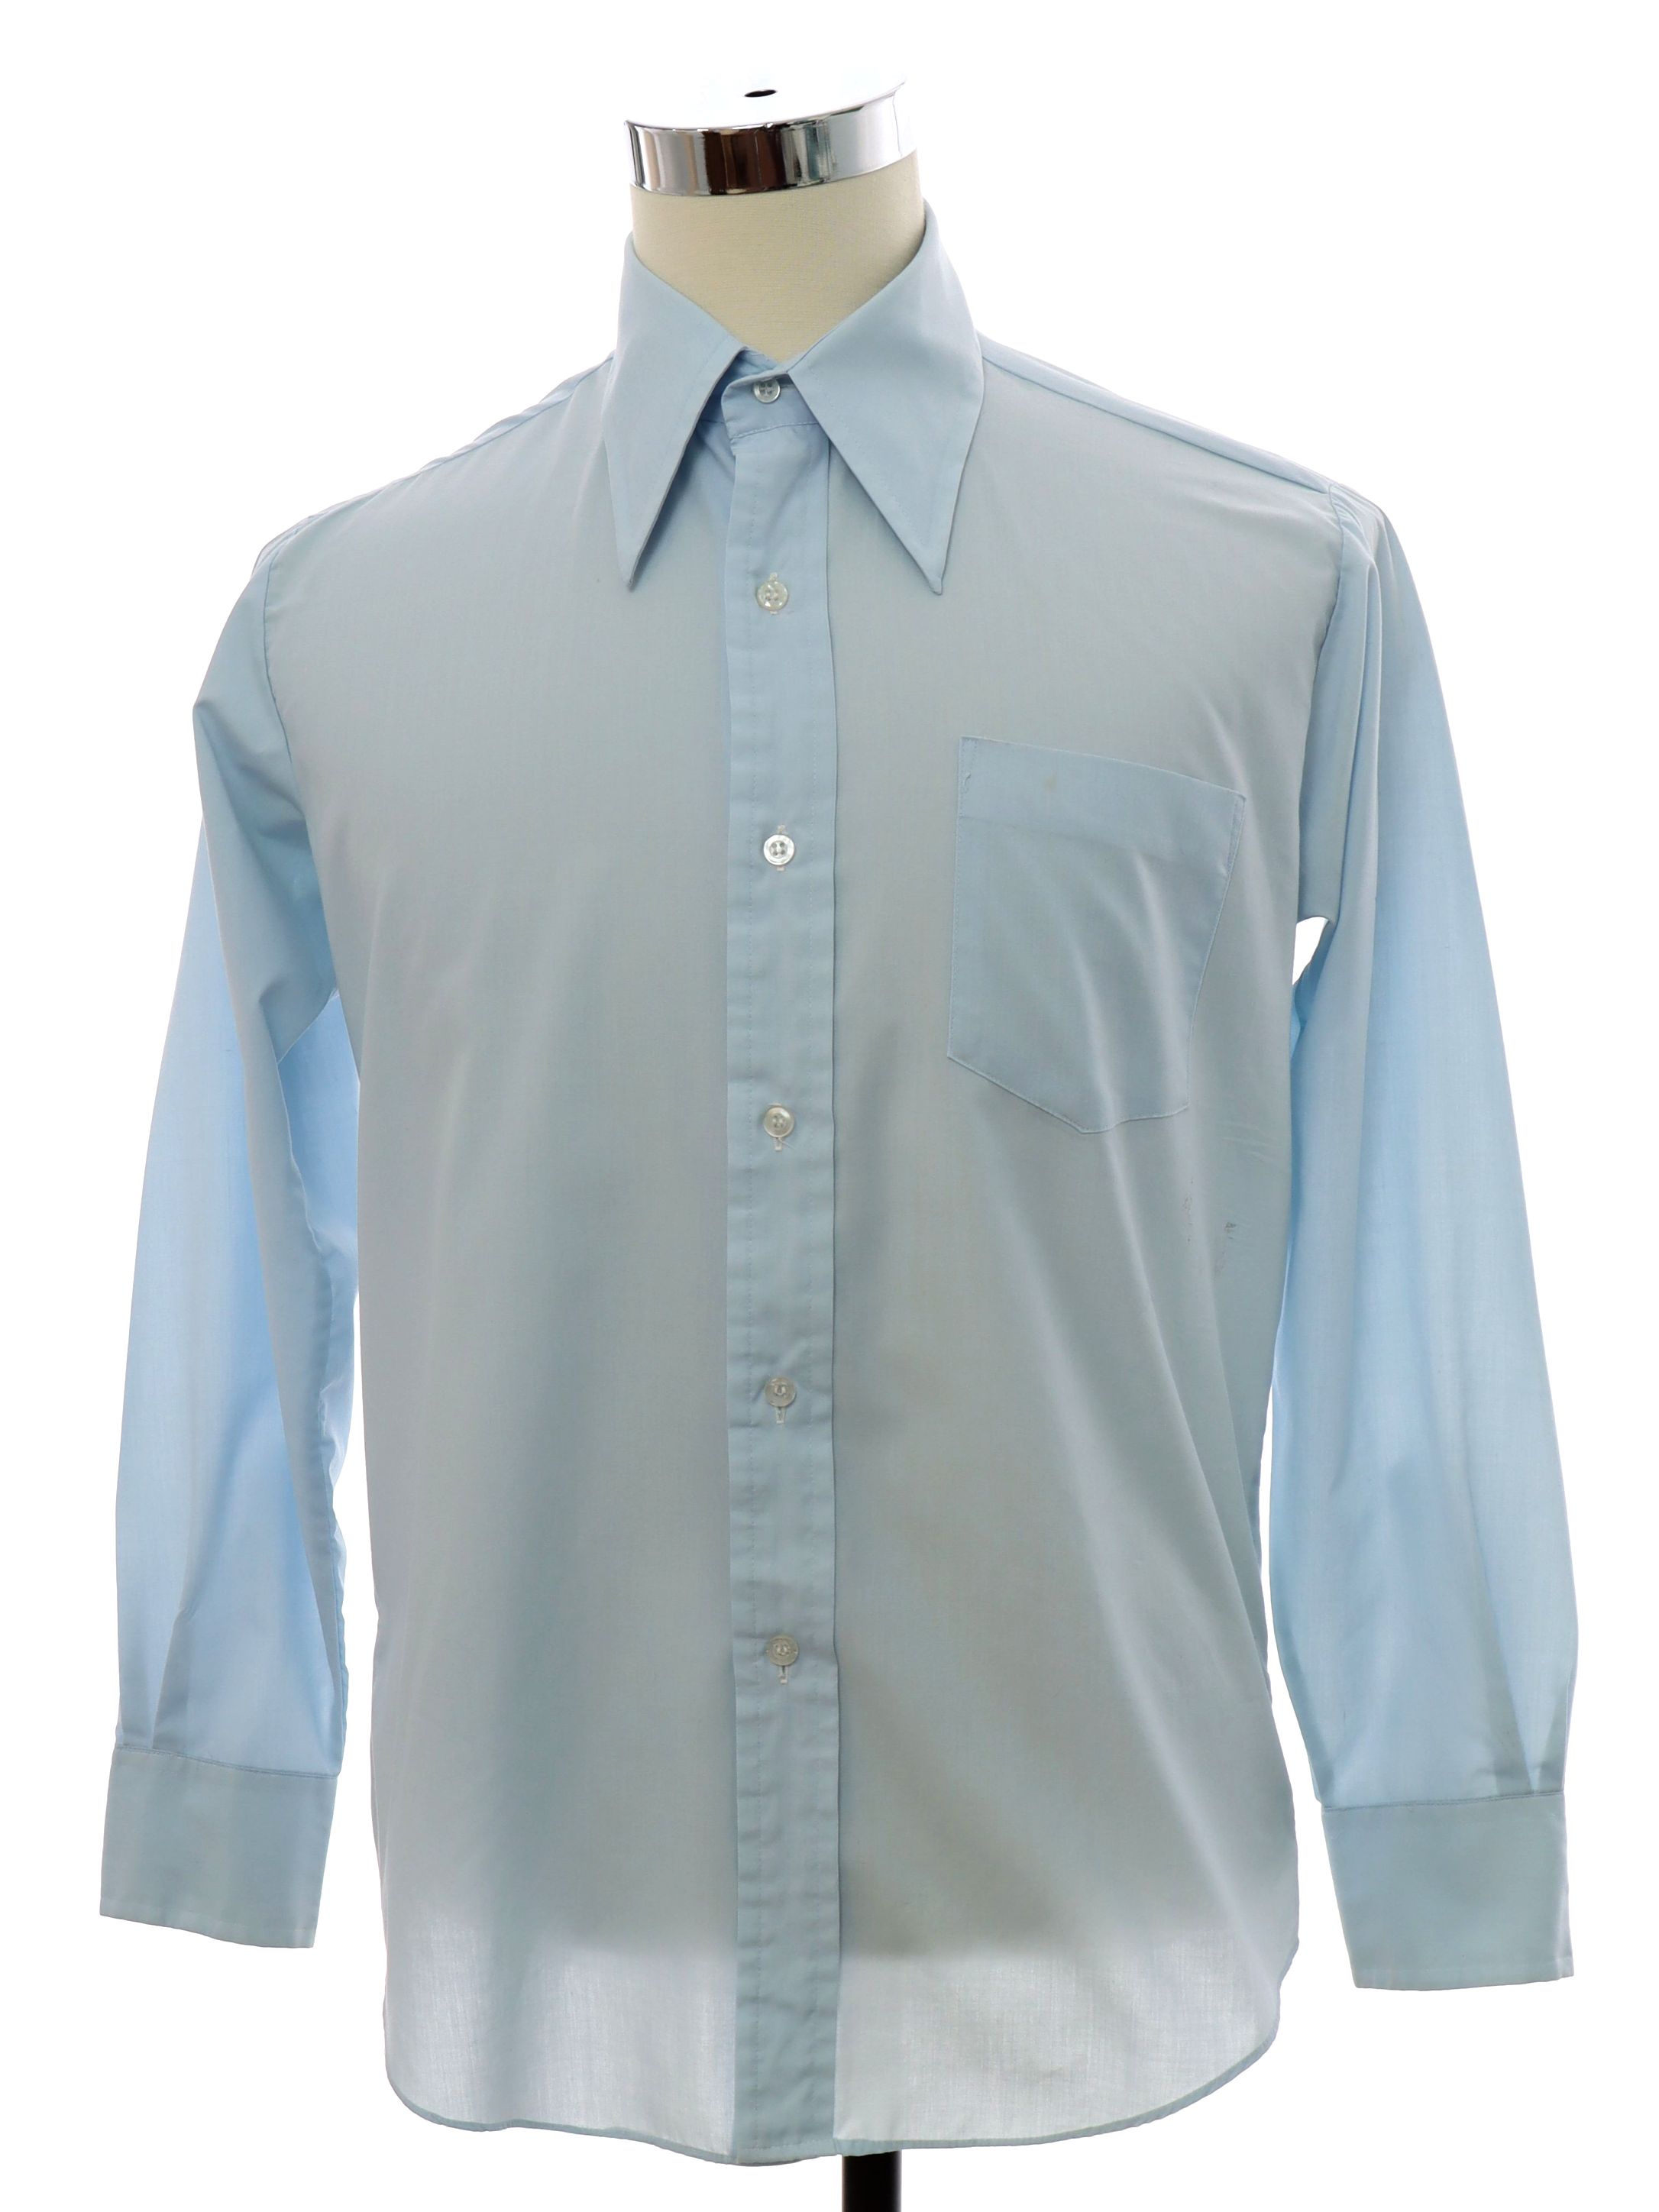 Retro 70s Shirt (Bud Berma) : 70s -Bud Berma- Mens baby blue polyester ...